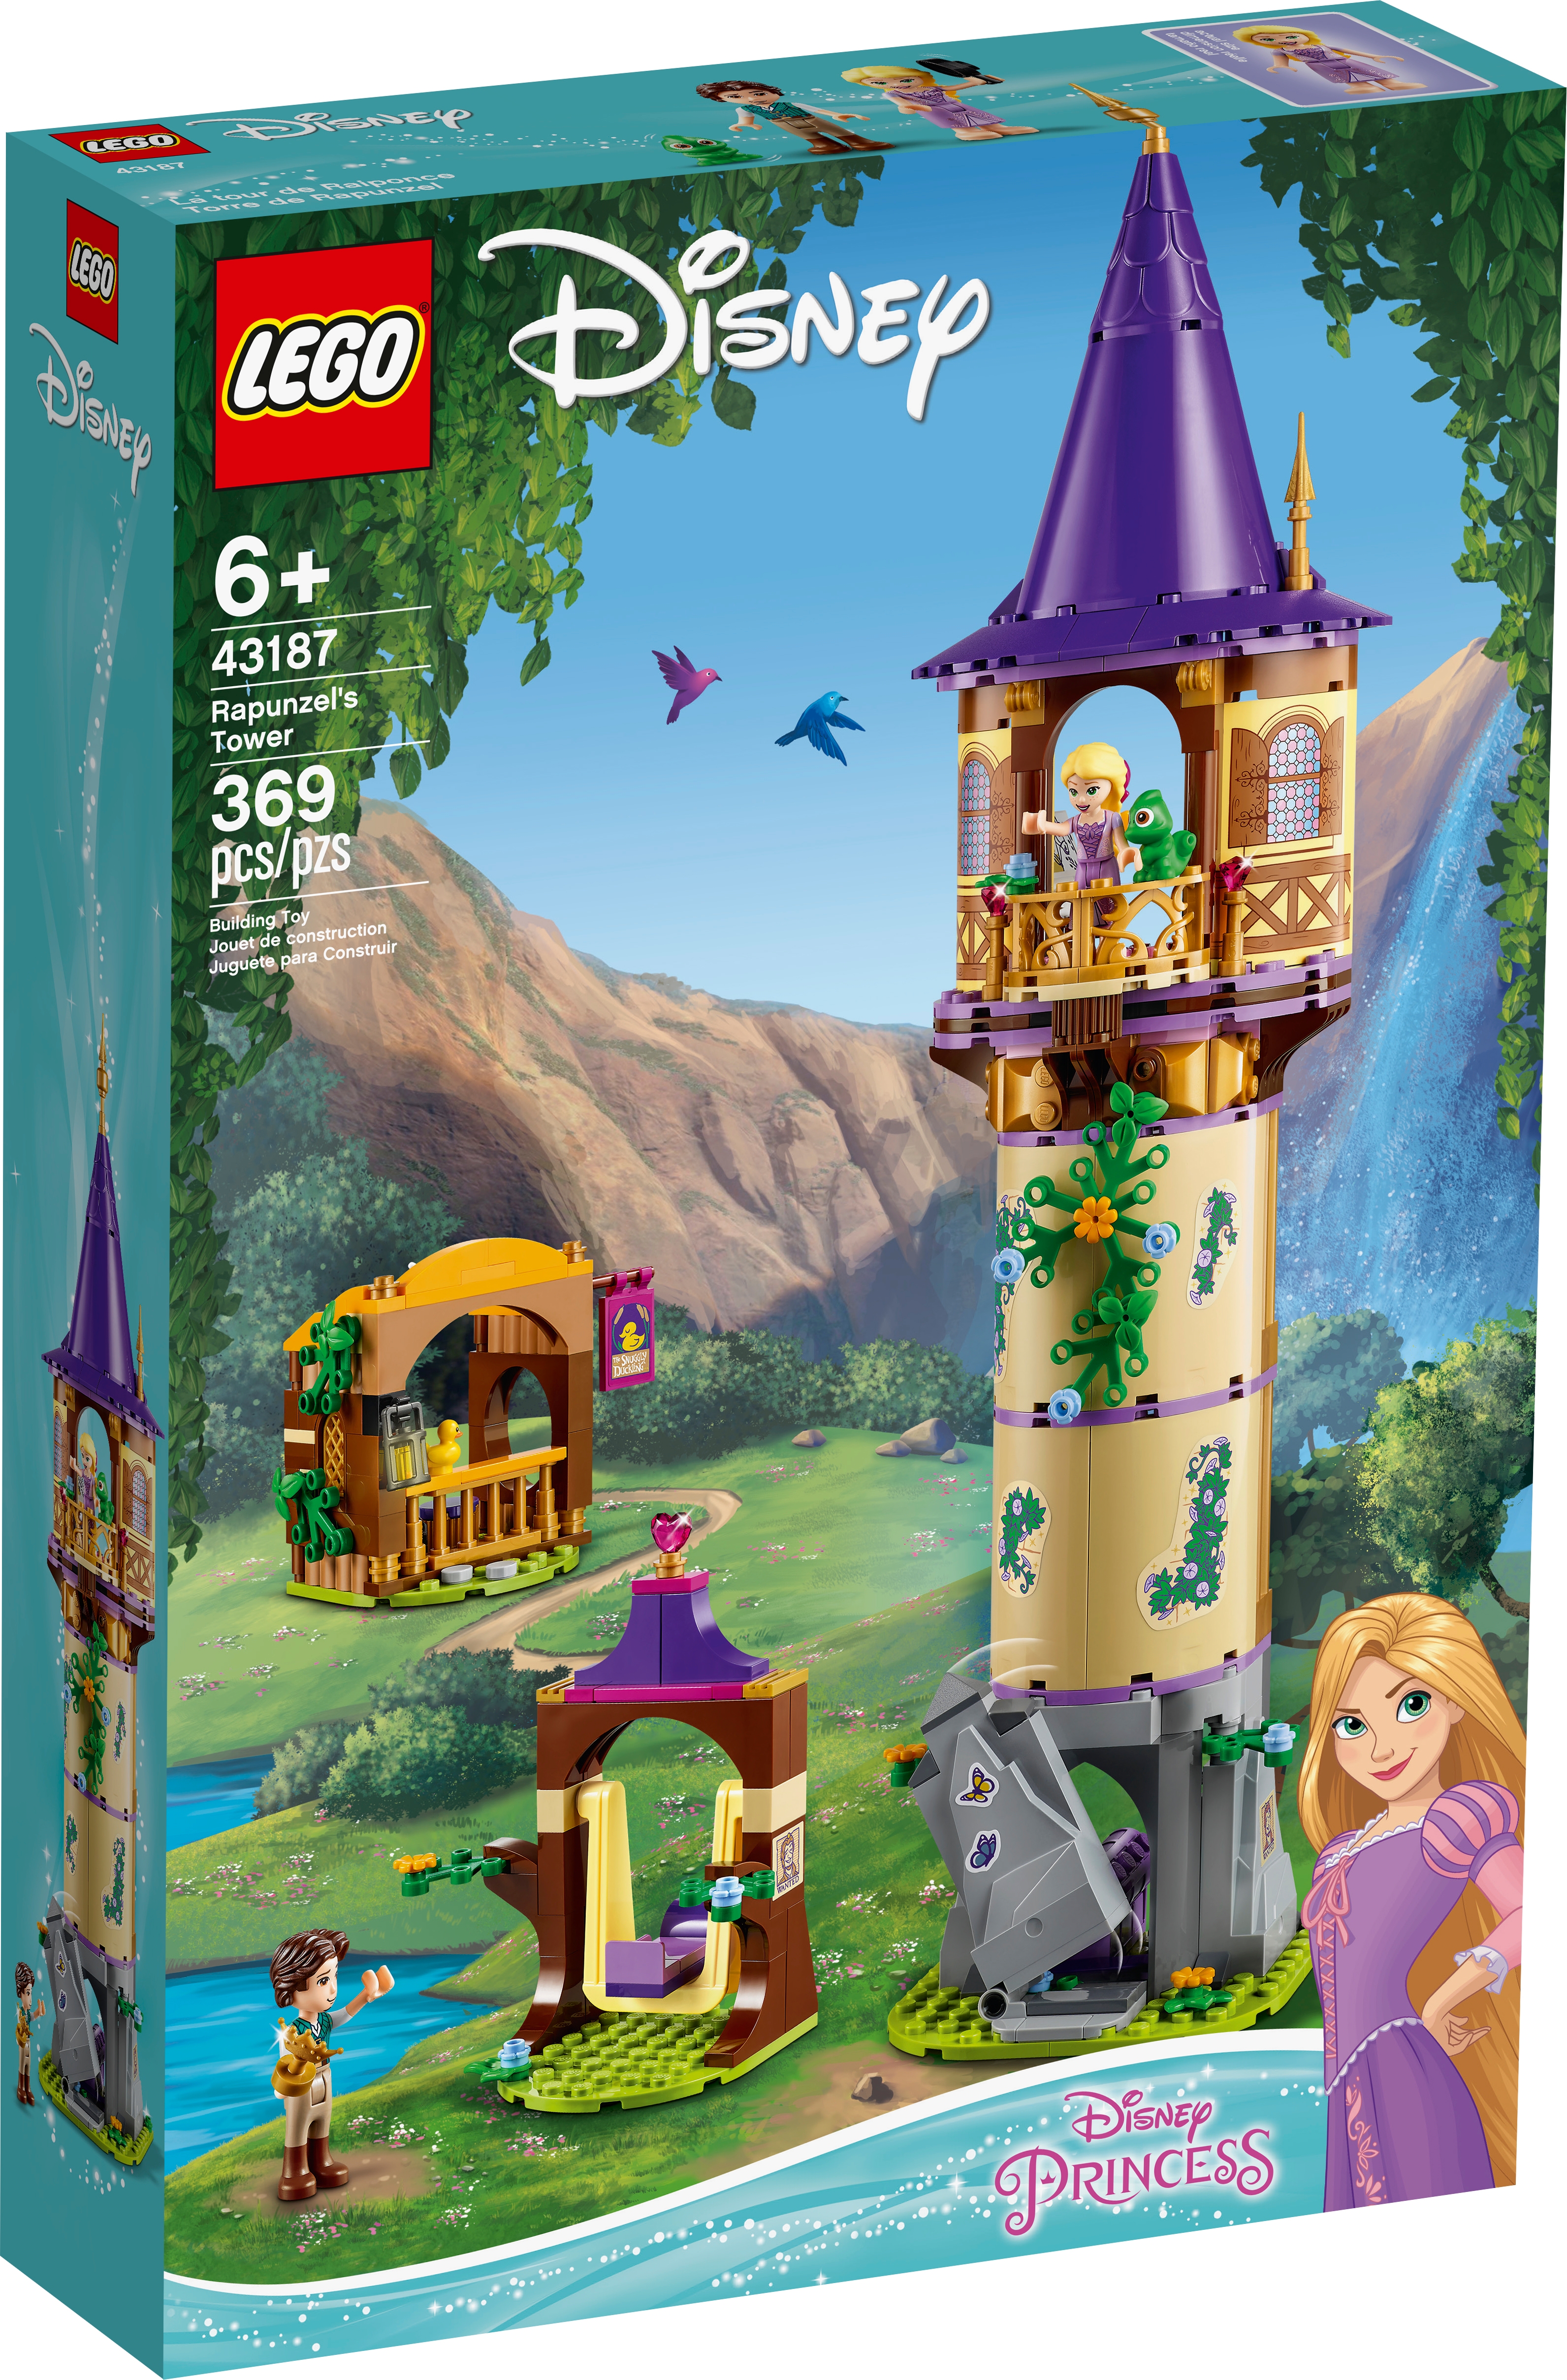 LEGO 43187 Disney Princess Rapunzel’s Tower Playset 